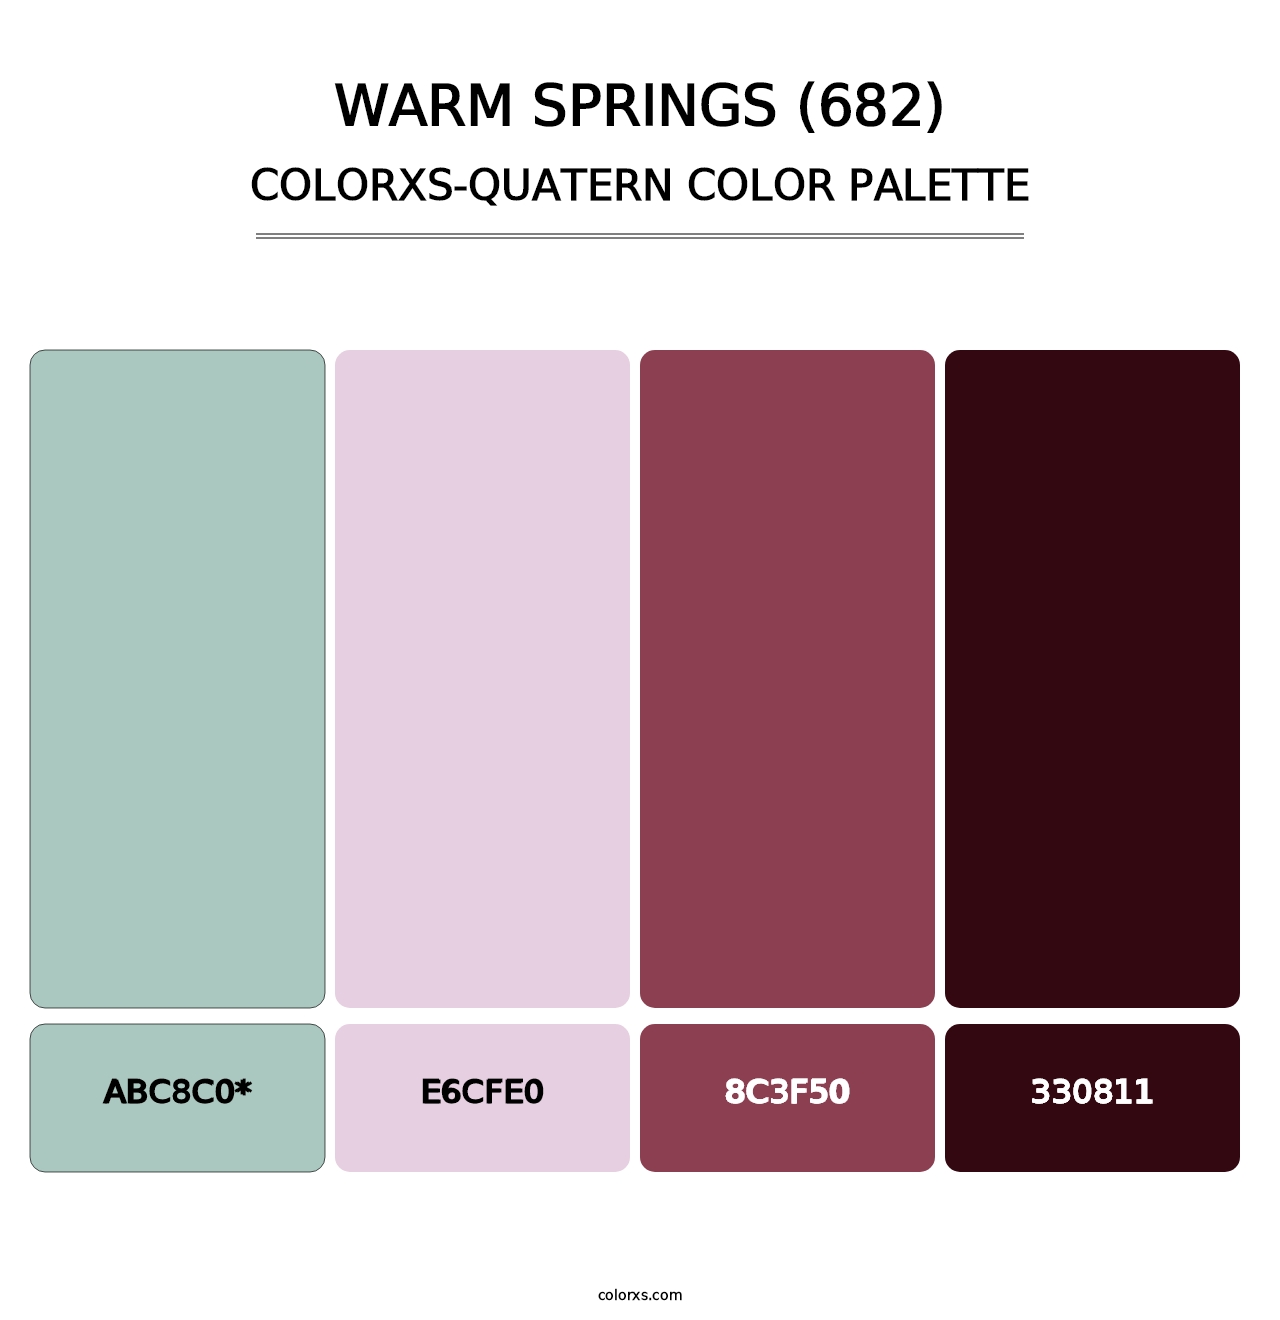 Warm Springs (682) - Colorxs Quatern Palette